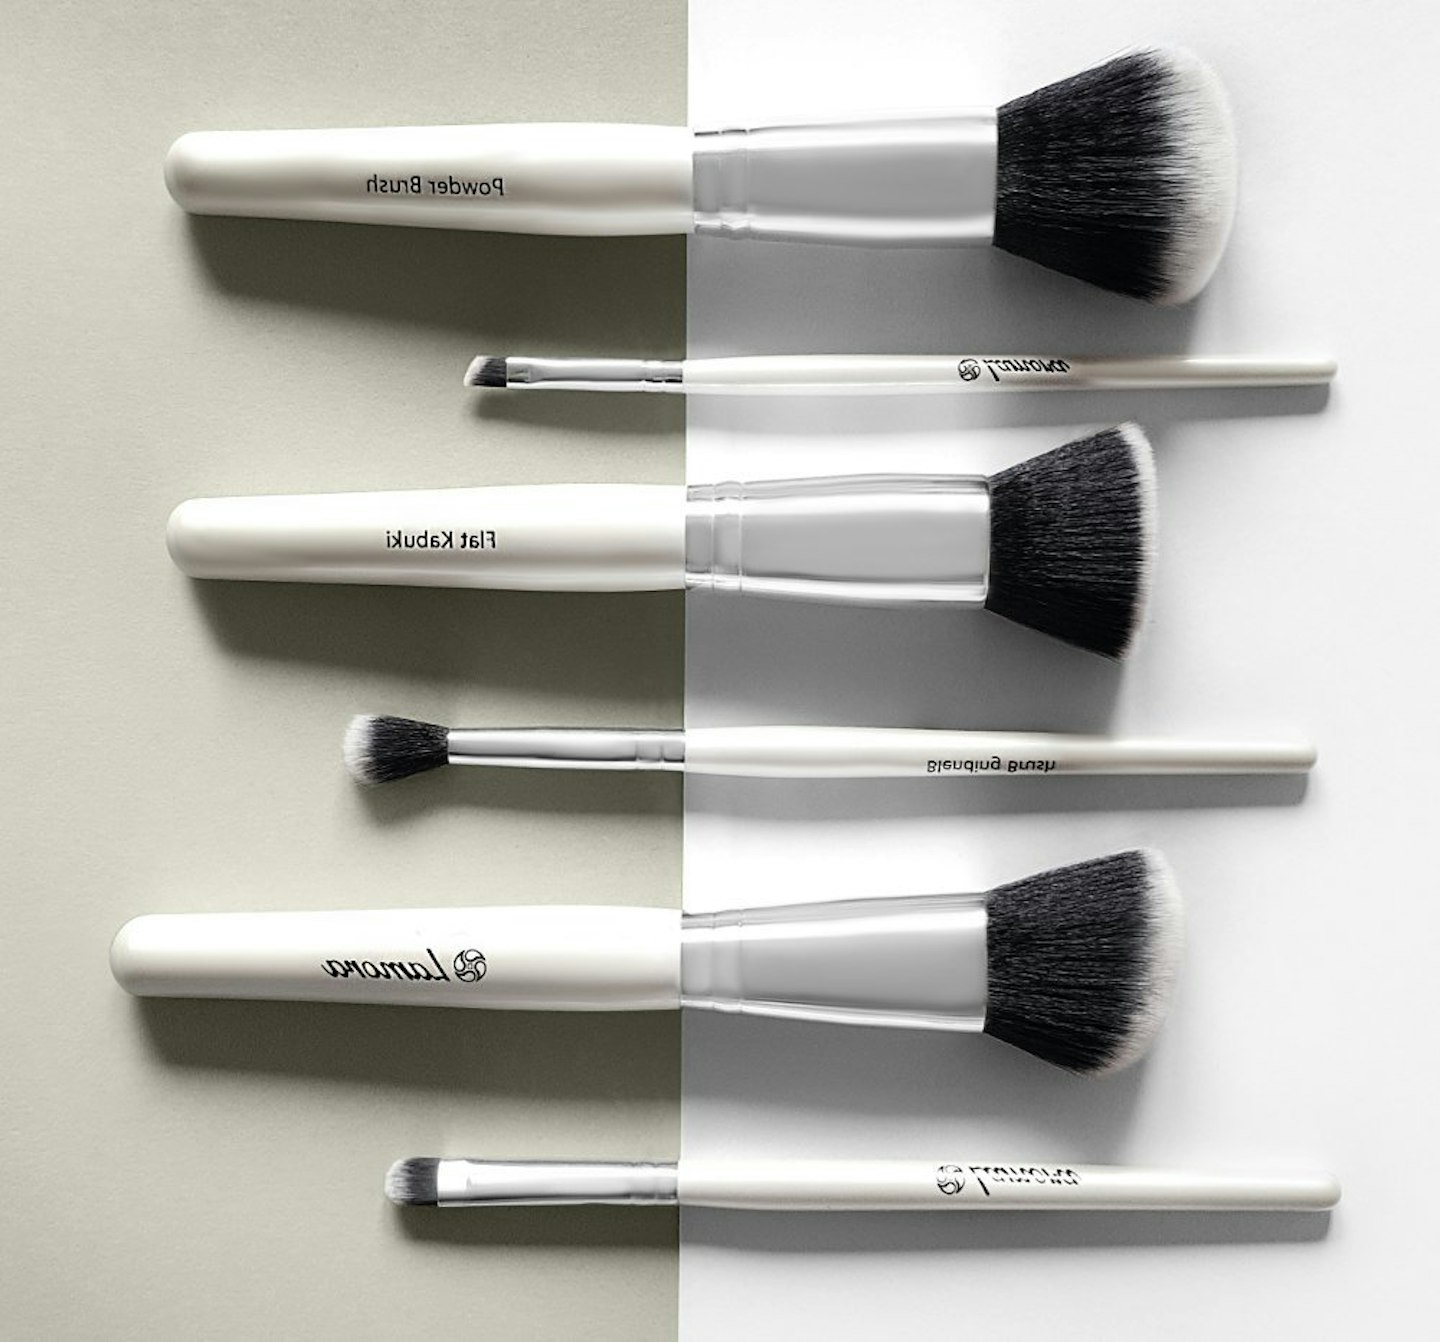 Kabuki Brushes Are The Best-Rated Beauty Buy On Amazon